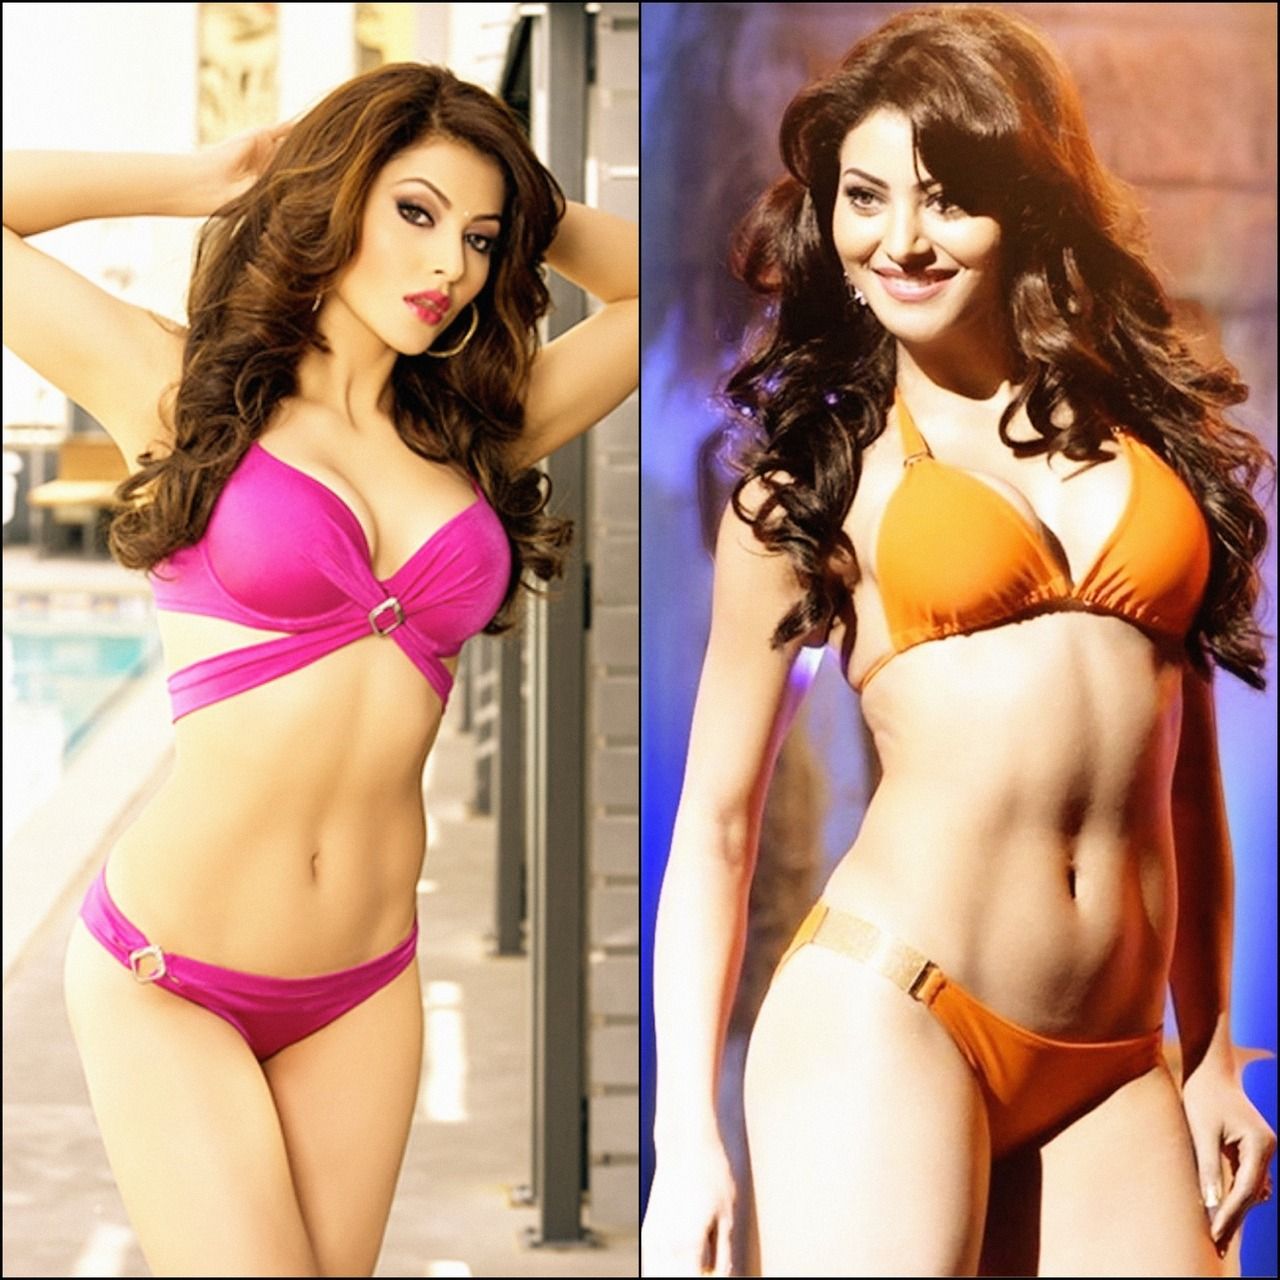 Hot Bikini Images Of Bollywood